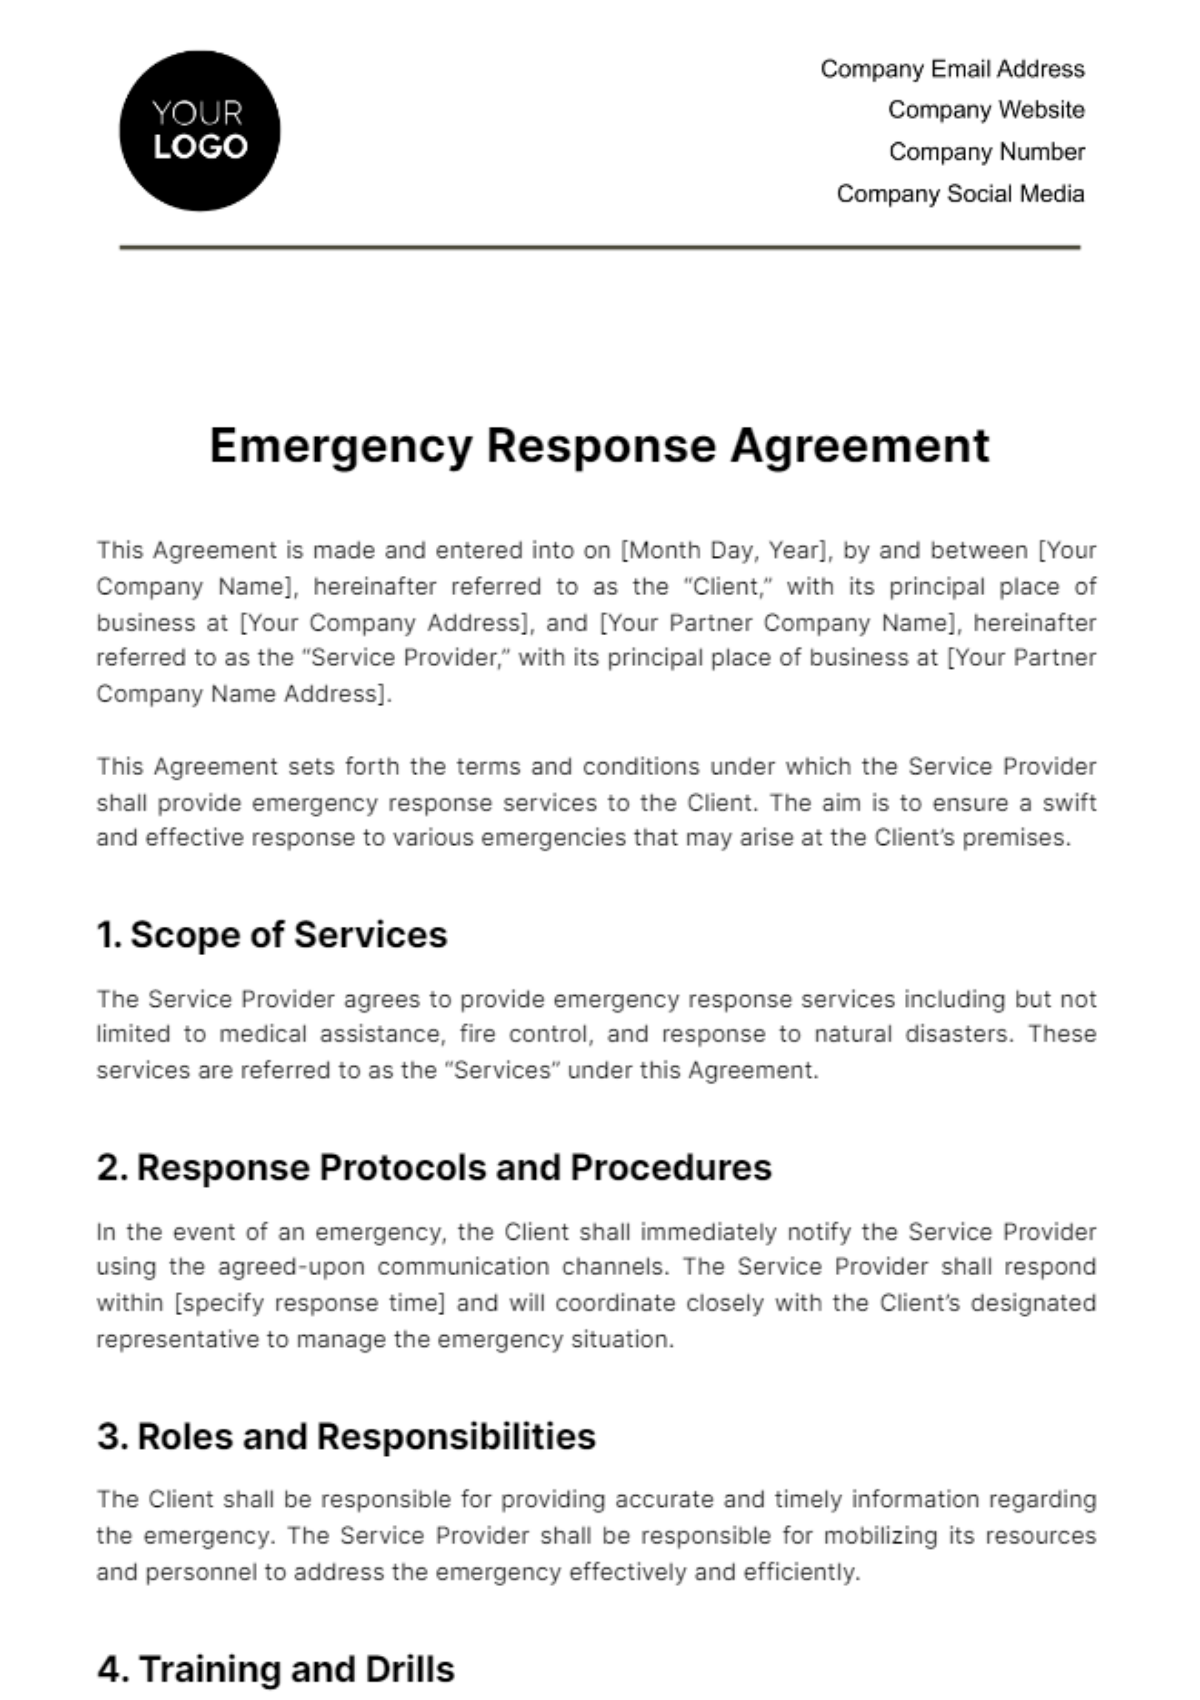 Emergency Response Agreement Template